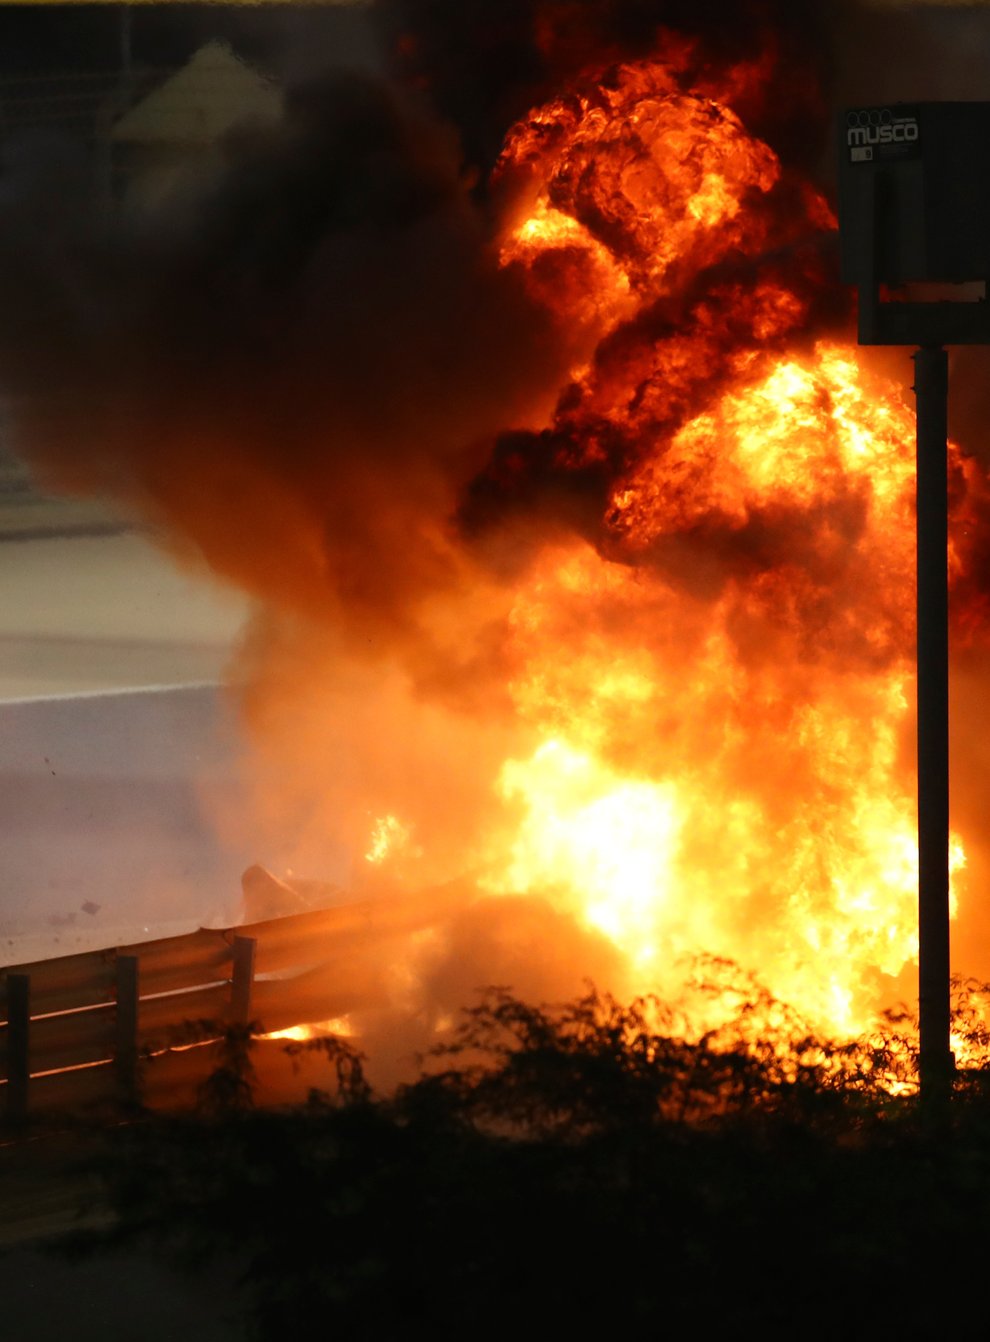 Romain Grosjean's car burst into flames on impact